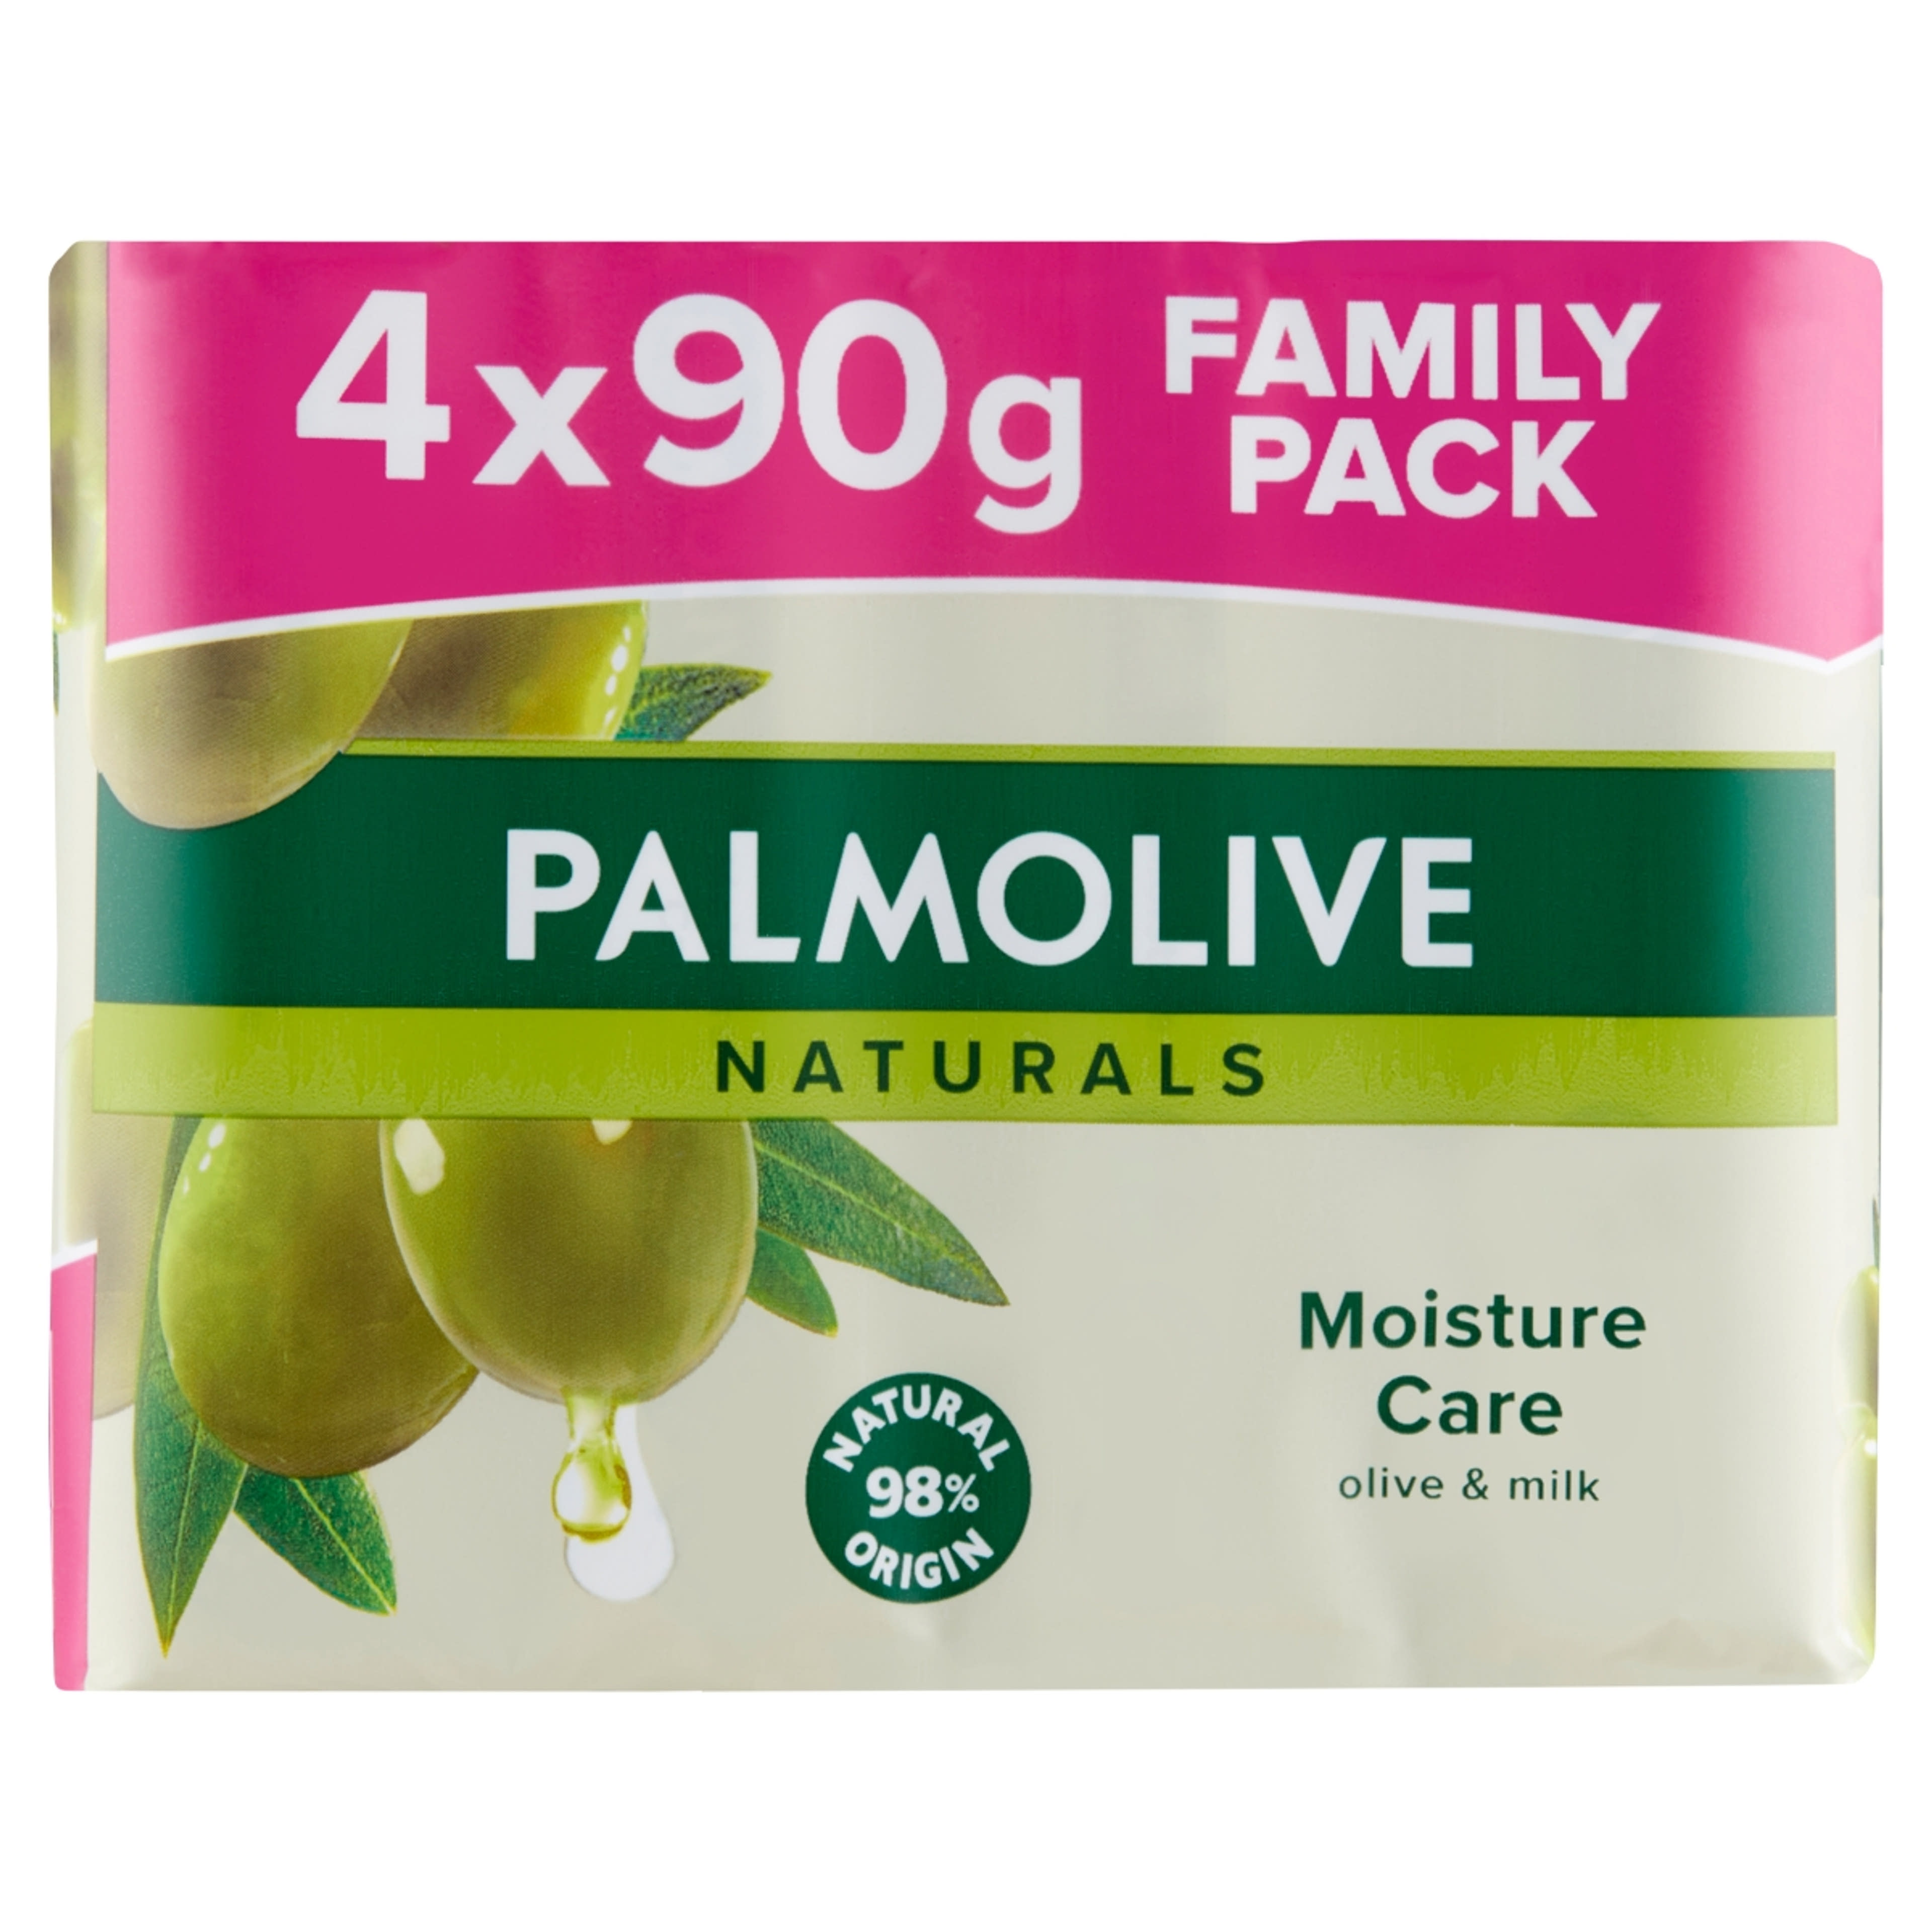 Palmolive Naturals Moisture Care pipereszappan olíva kivonattal 4 x 90 g - 360 g